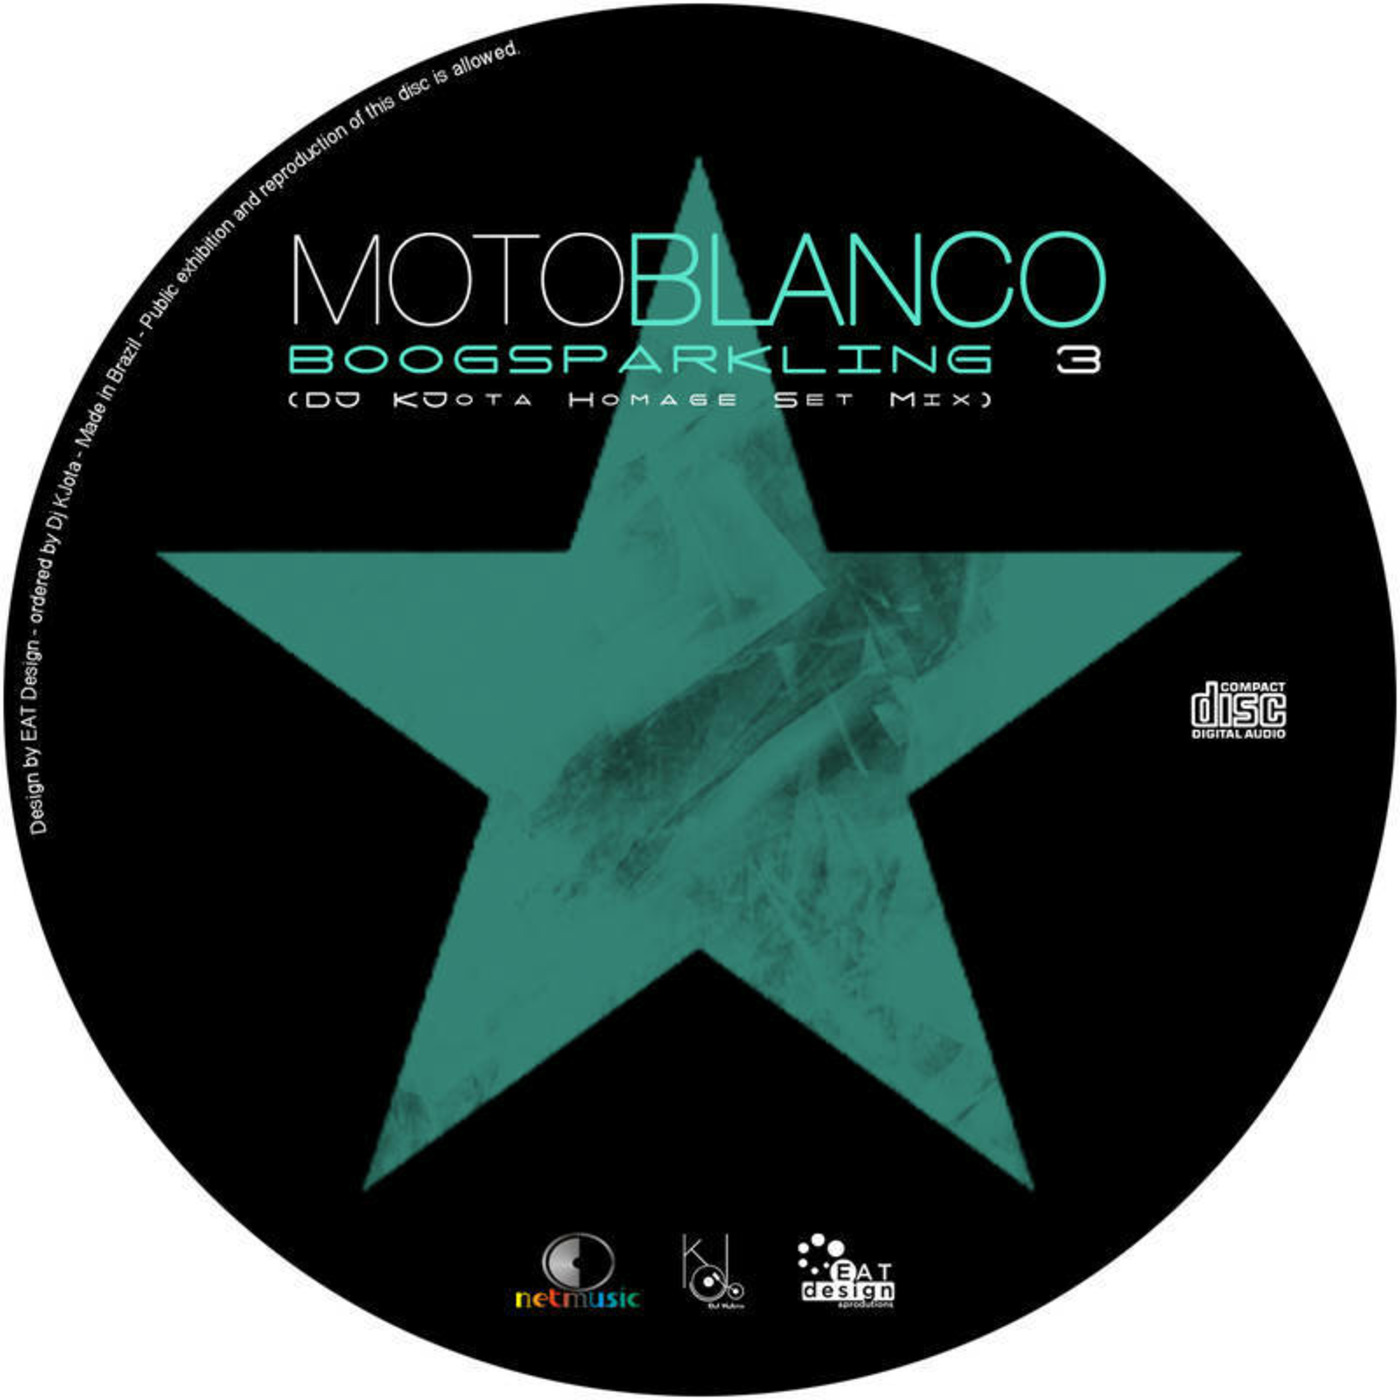 Moto Blanco BoogSparkling 3 (DJ KJota Homage Set Mix)